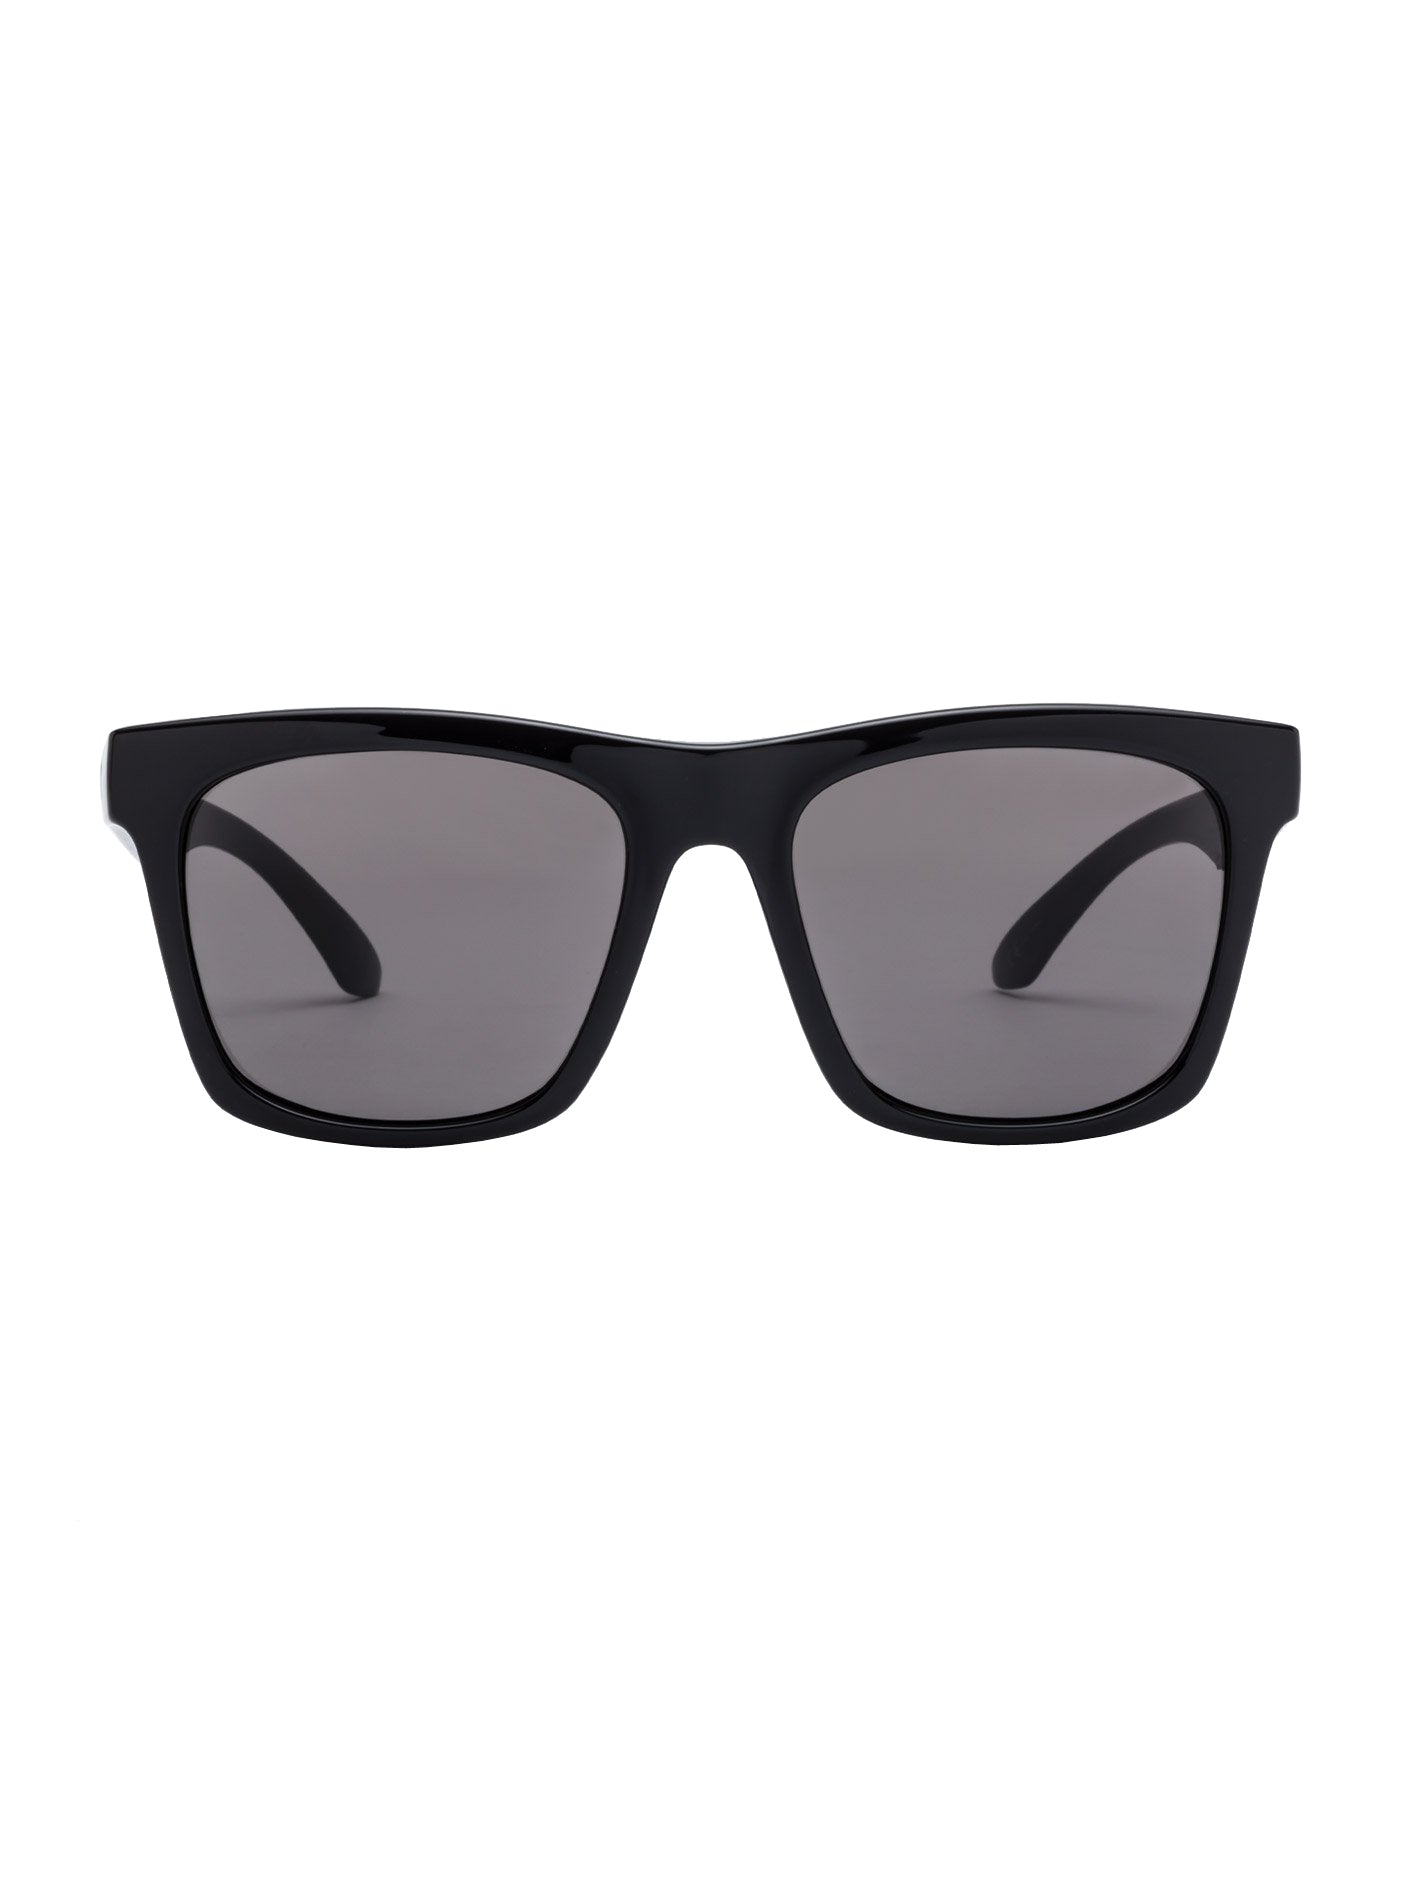 Volcom Jewel Sunglasses Gloss Black Gray